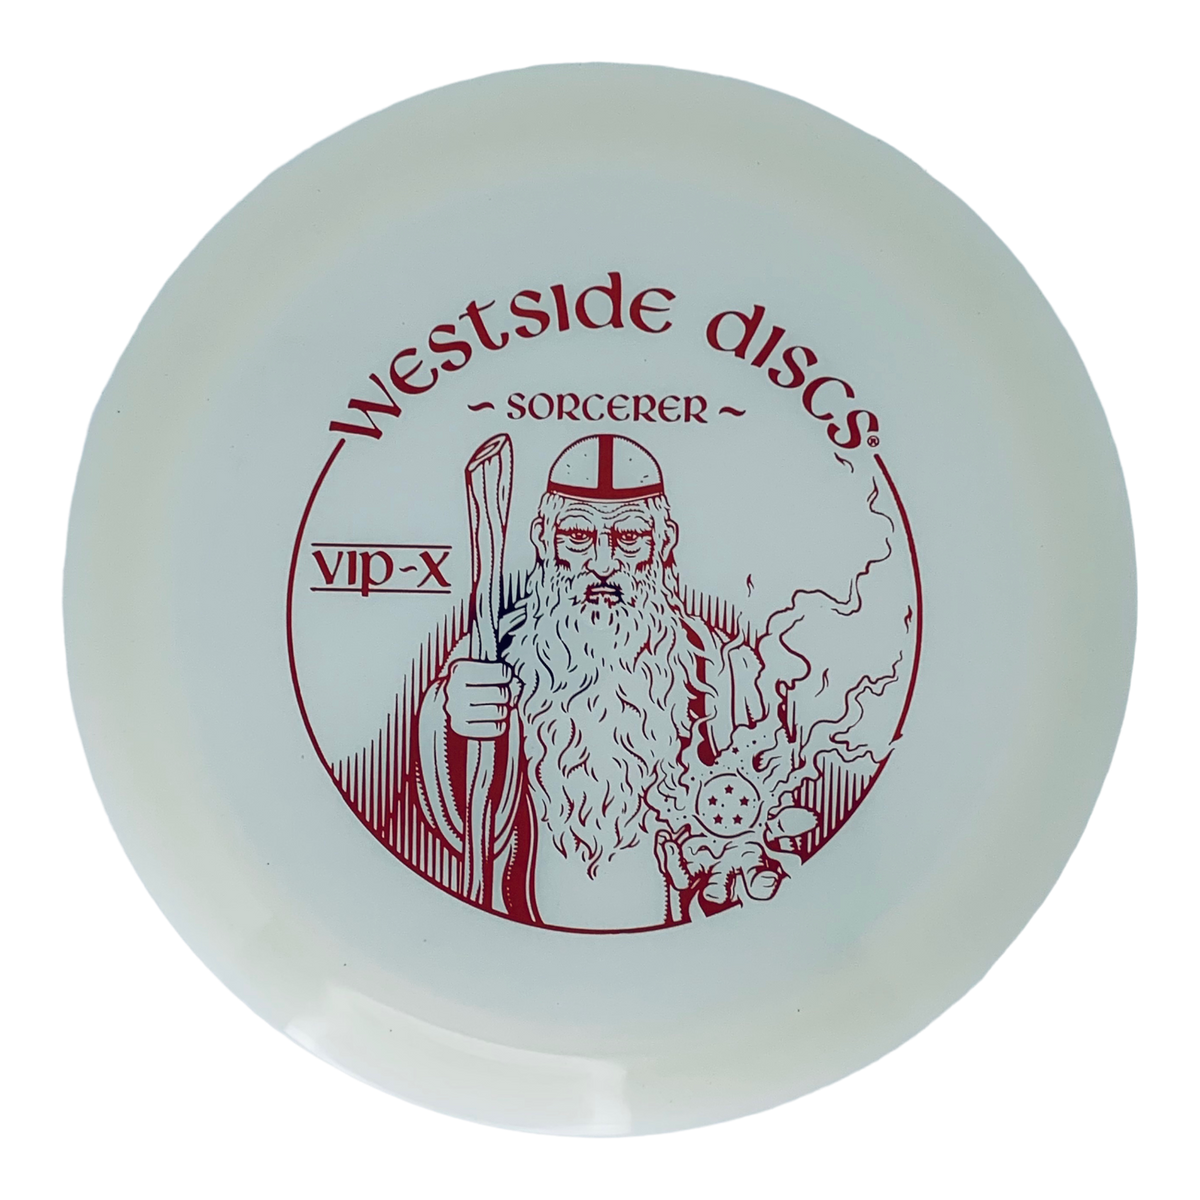 Westside Discs VIP-X Sorcerer - Tyyni Stamp 2022